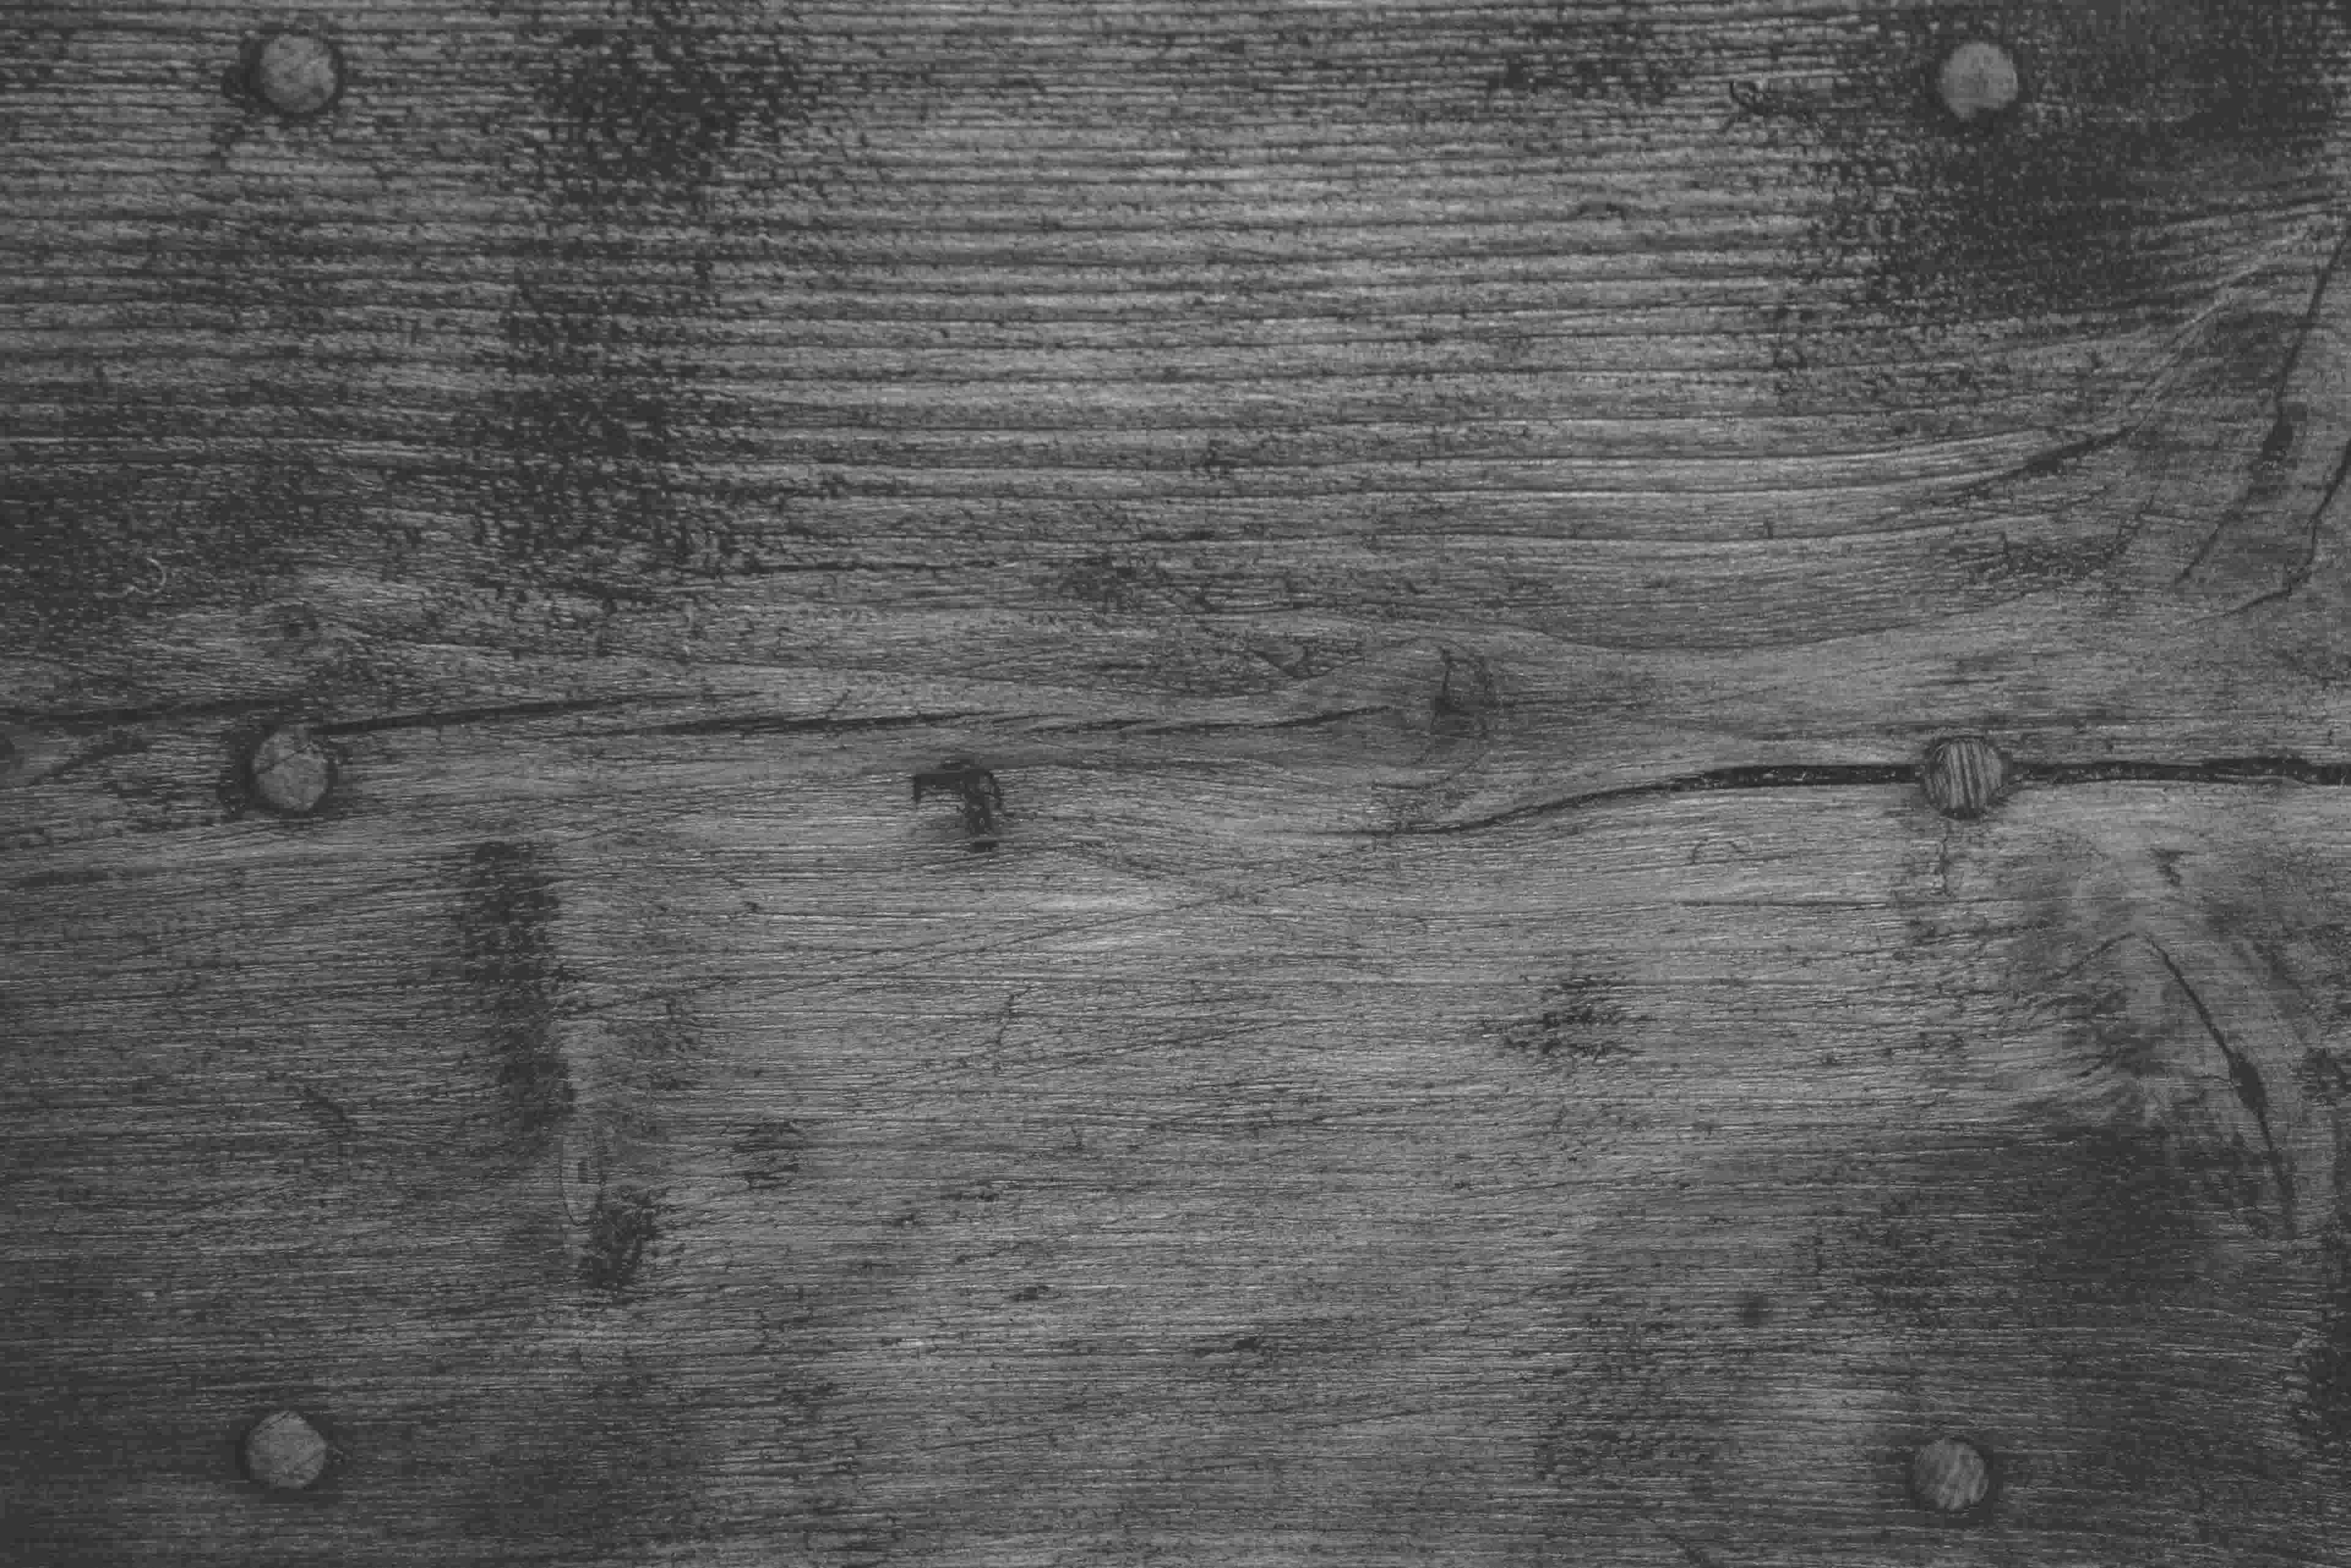 wood grain background image